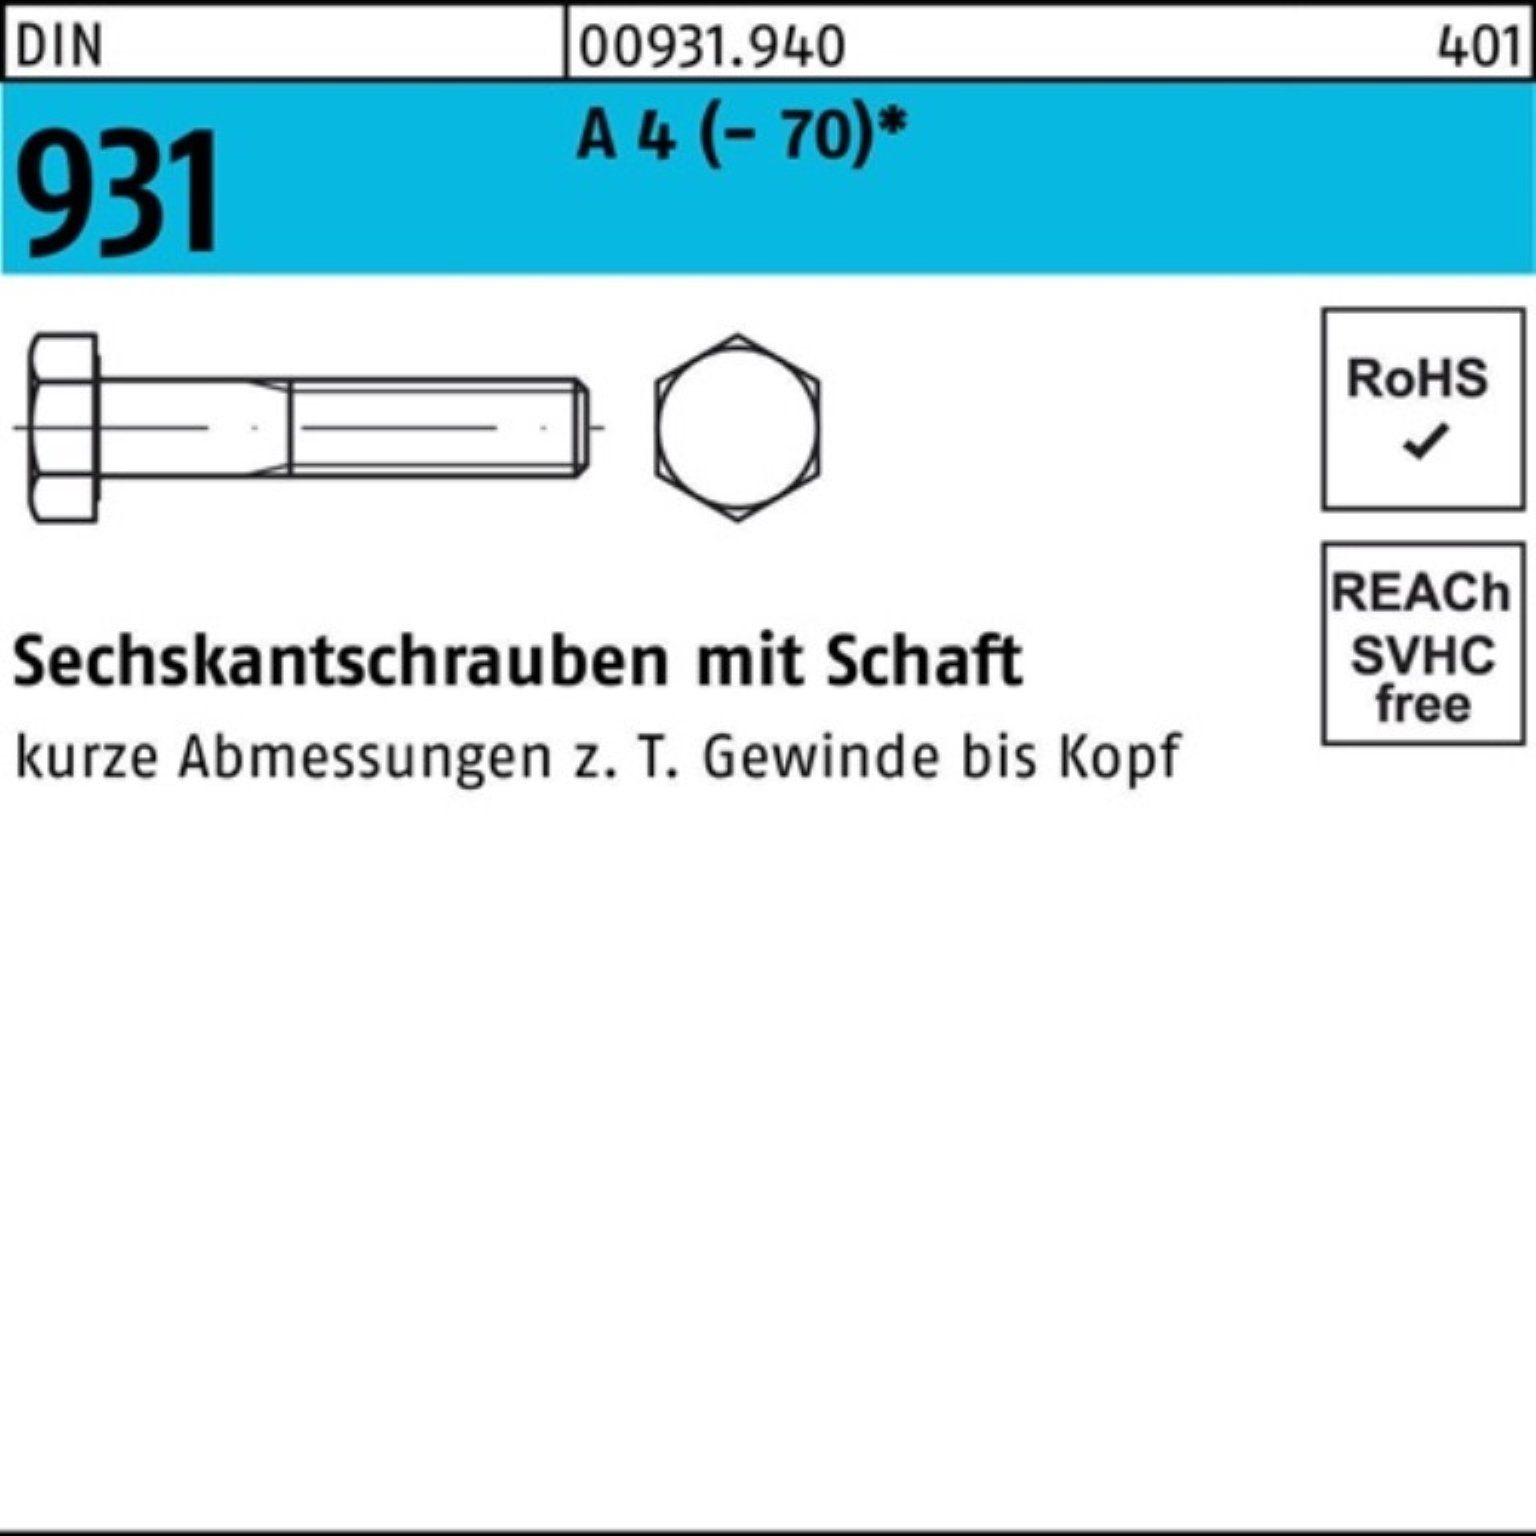 Reyher Sechskantschraube 100er Pack Sechskantschraube DIN 931 Schaft M8x 90 A 4 (70) 100 Stü | Schrauben